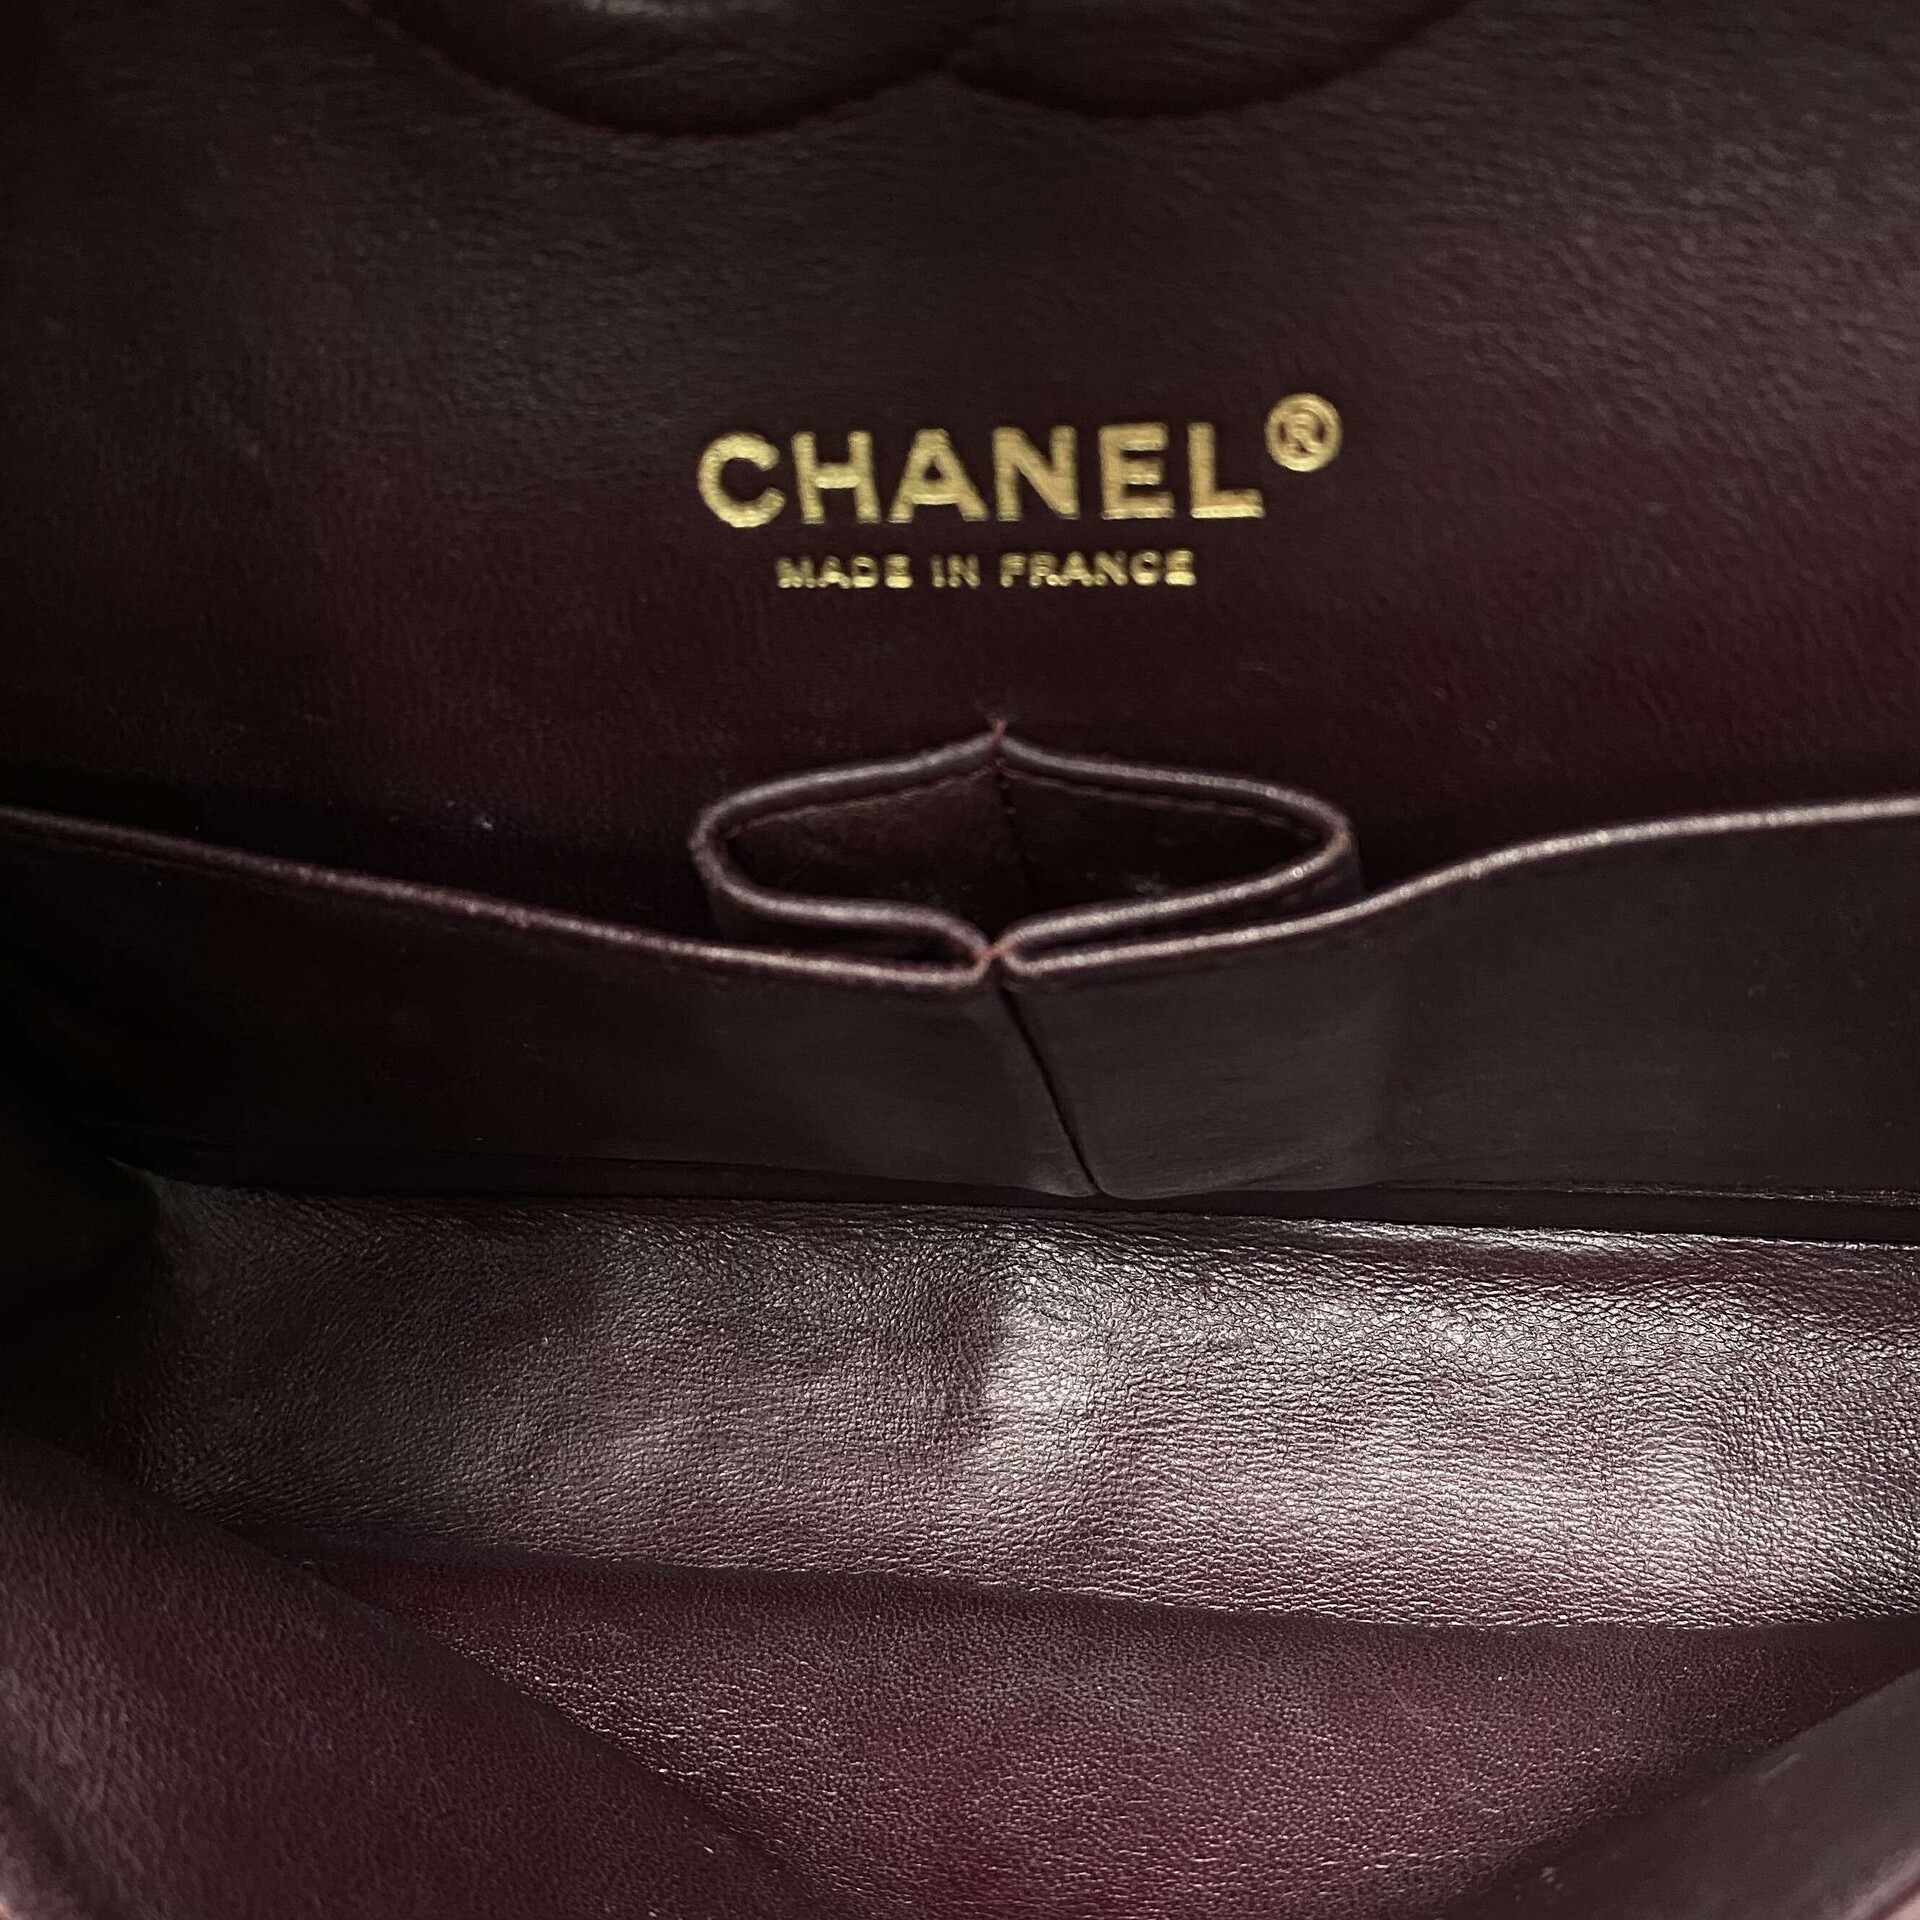 Bolsa Chanel Classic Medium Double Flap Preta